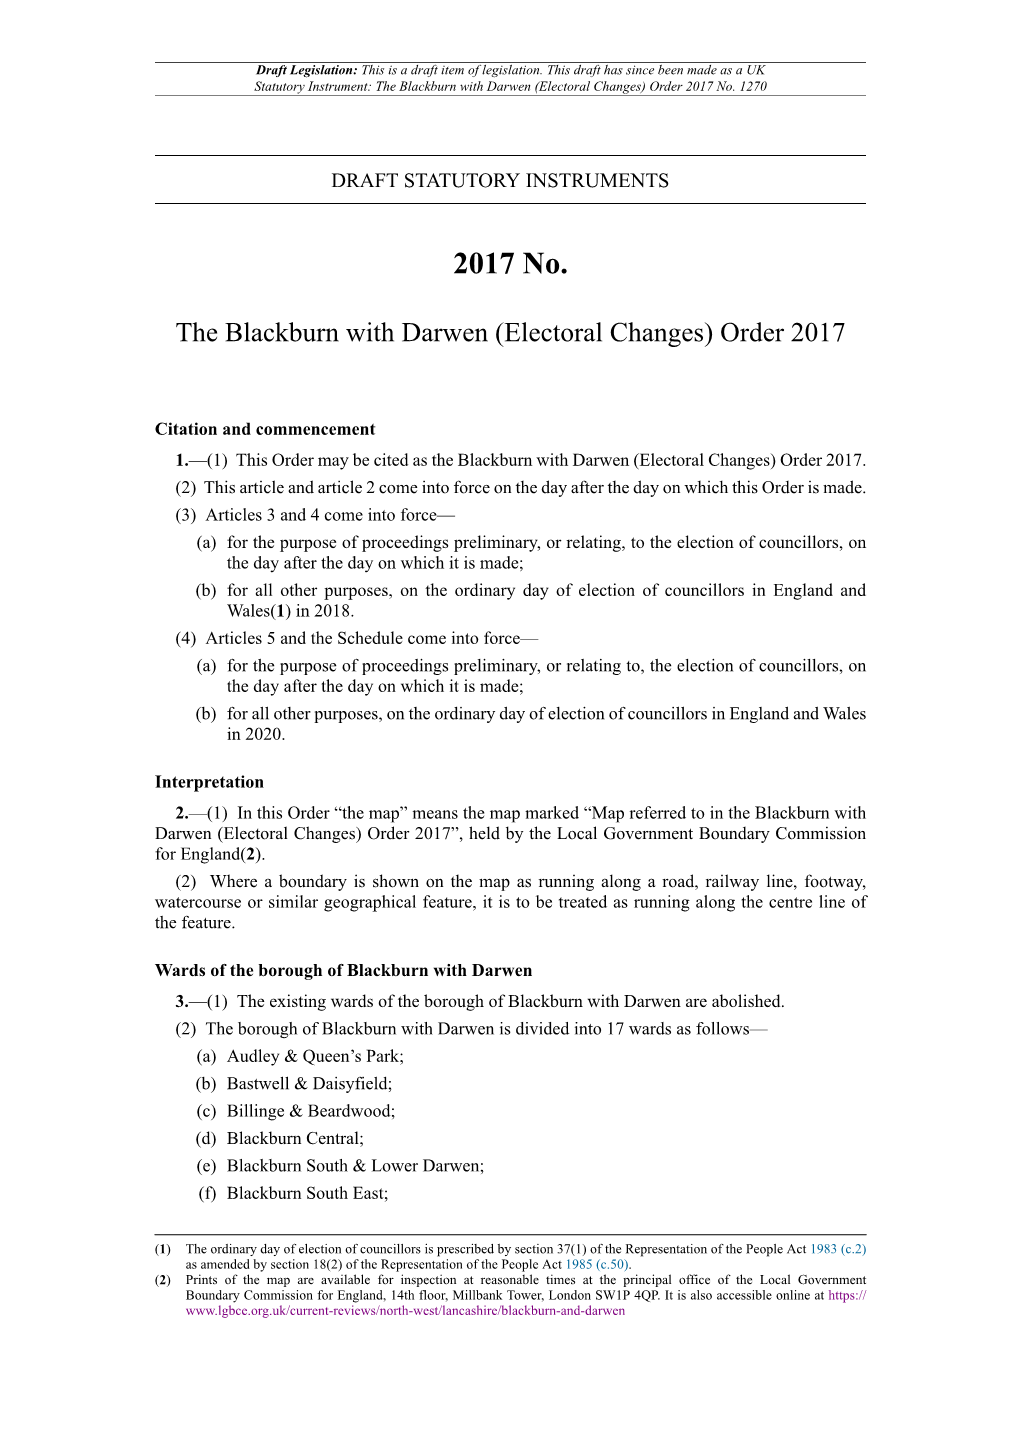 The Blackburn with Darwen (Electoral Changes) Order 2017 No